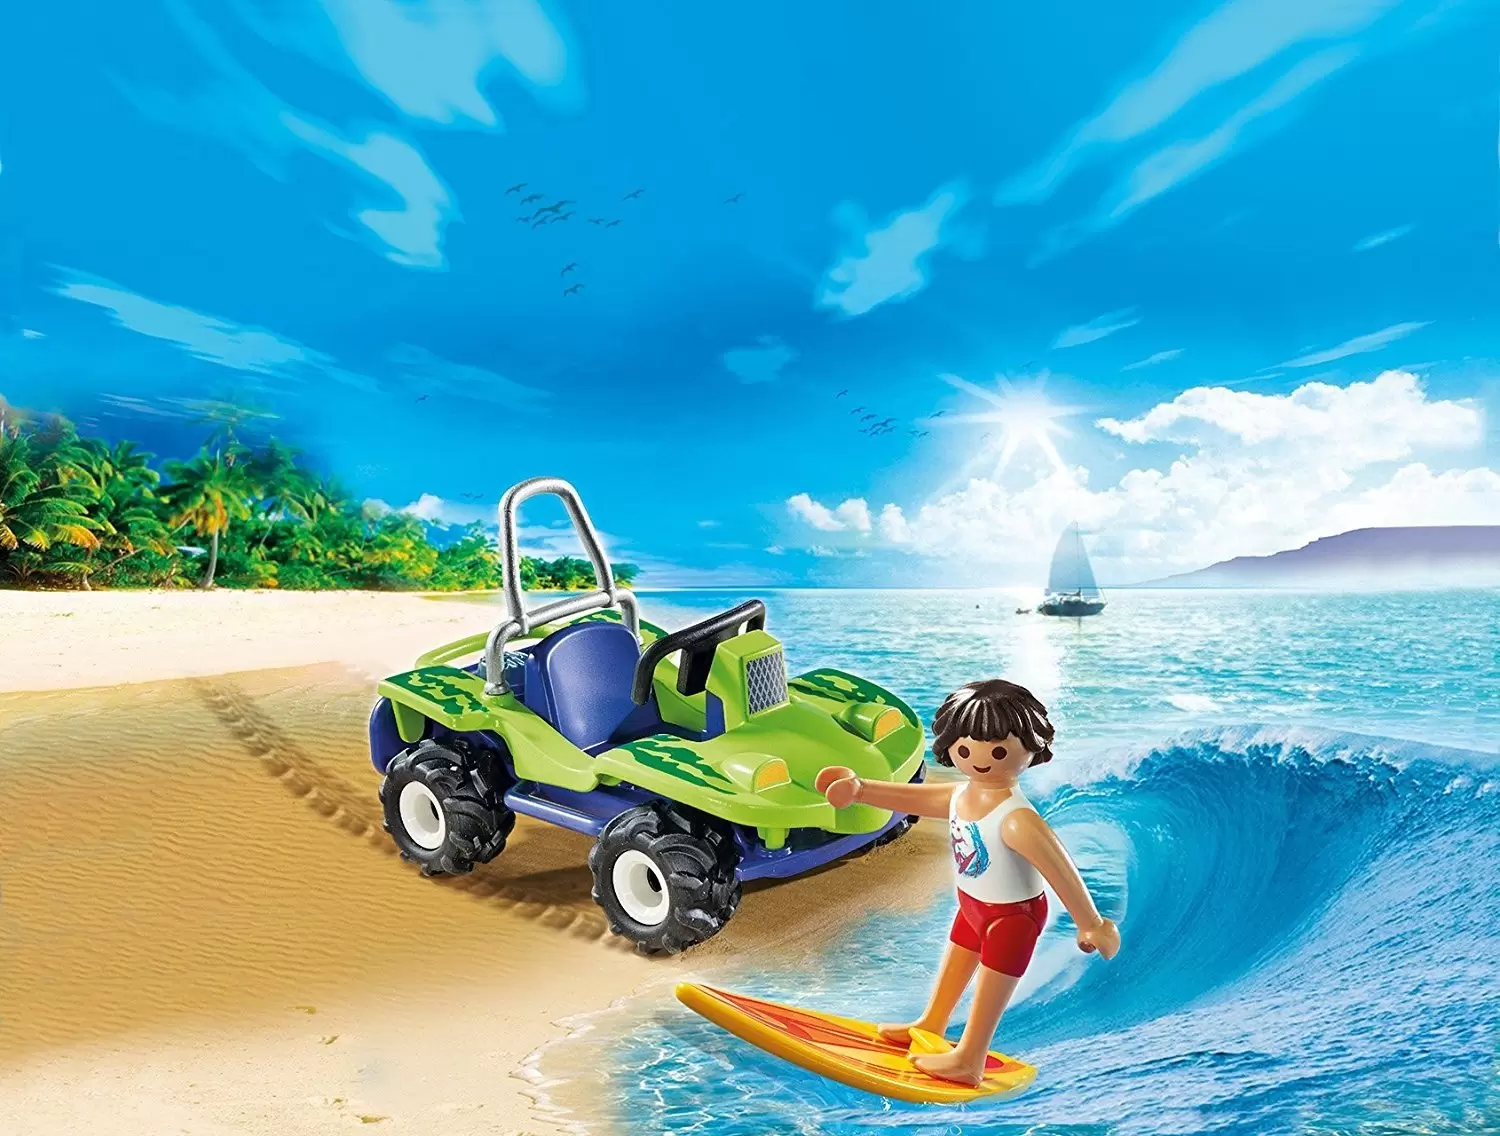 Playmobil on Hollidays - Surfer with Beach Quad